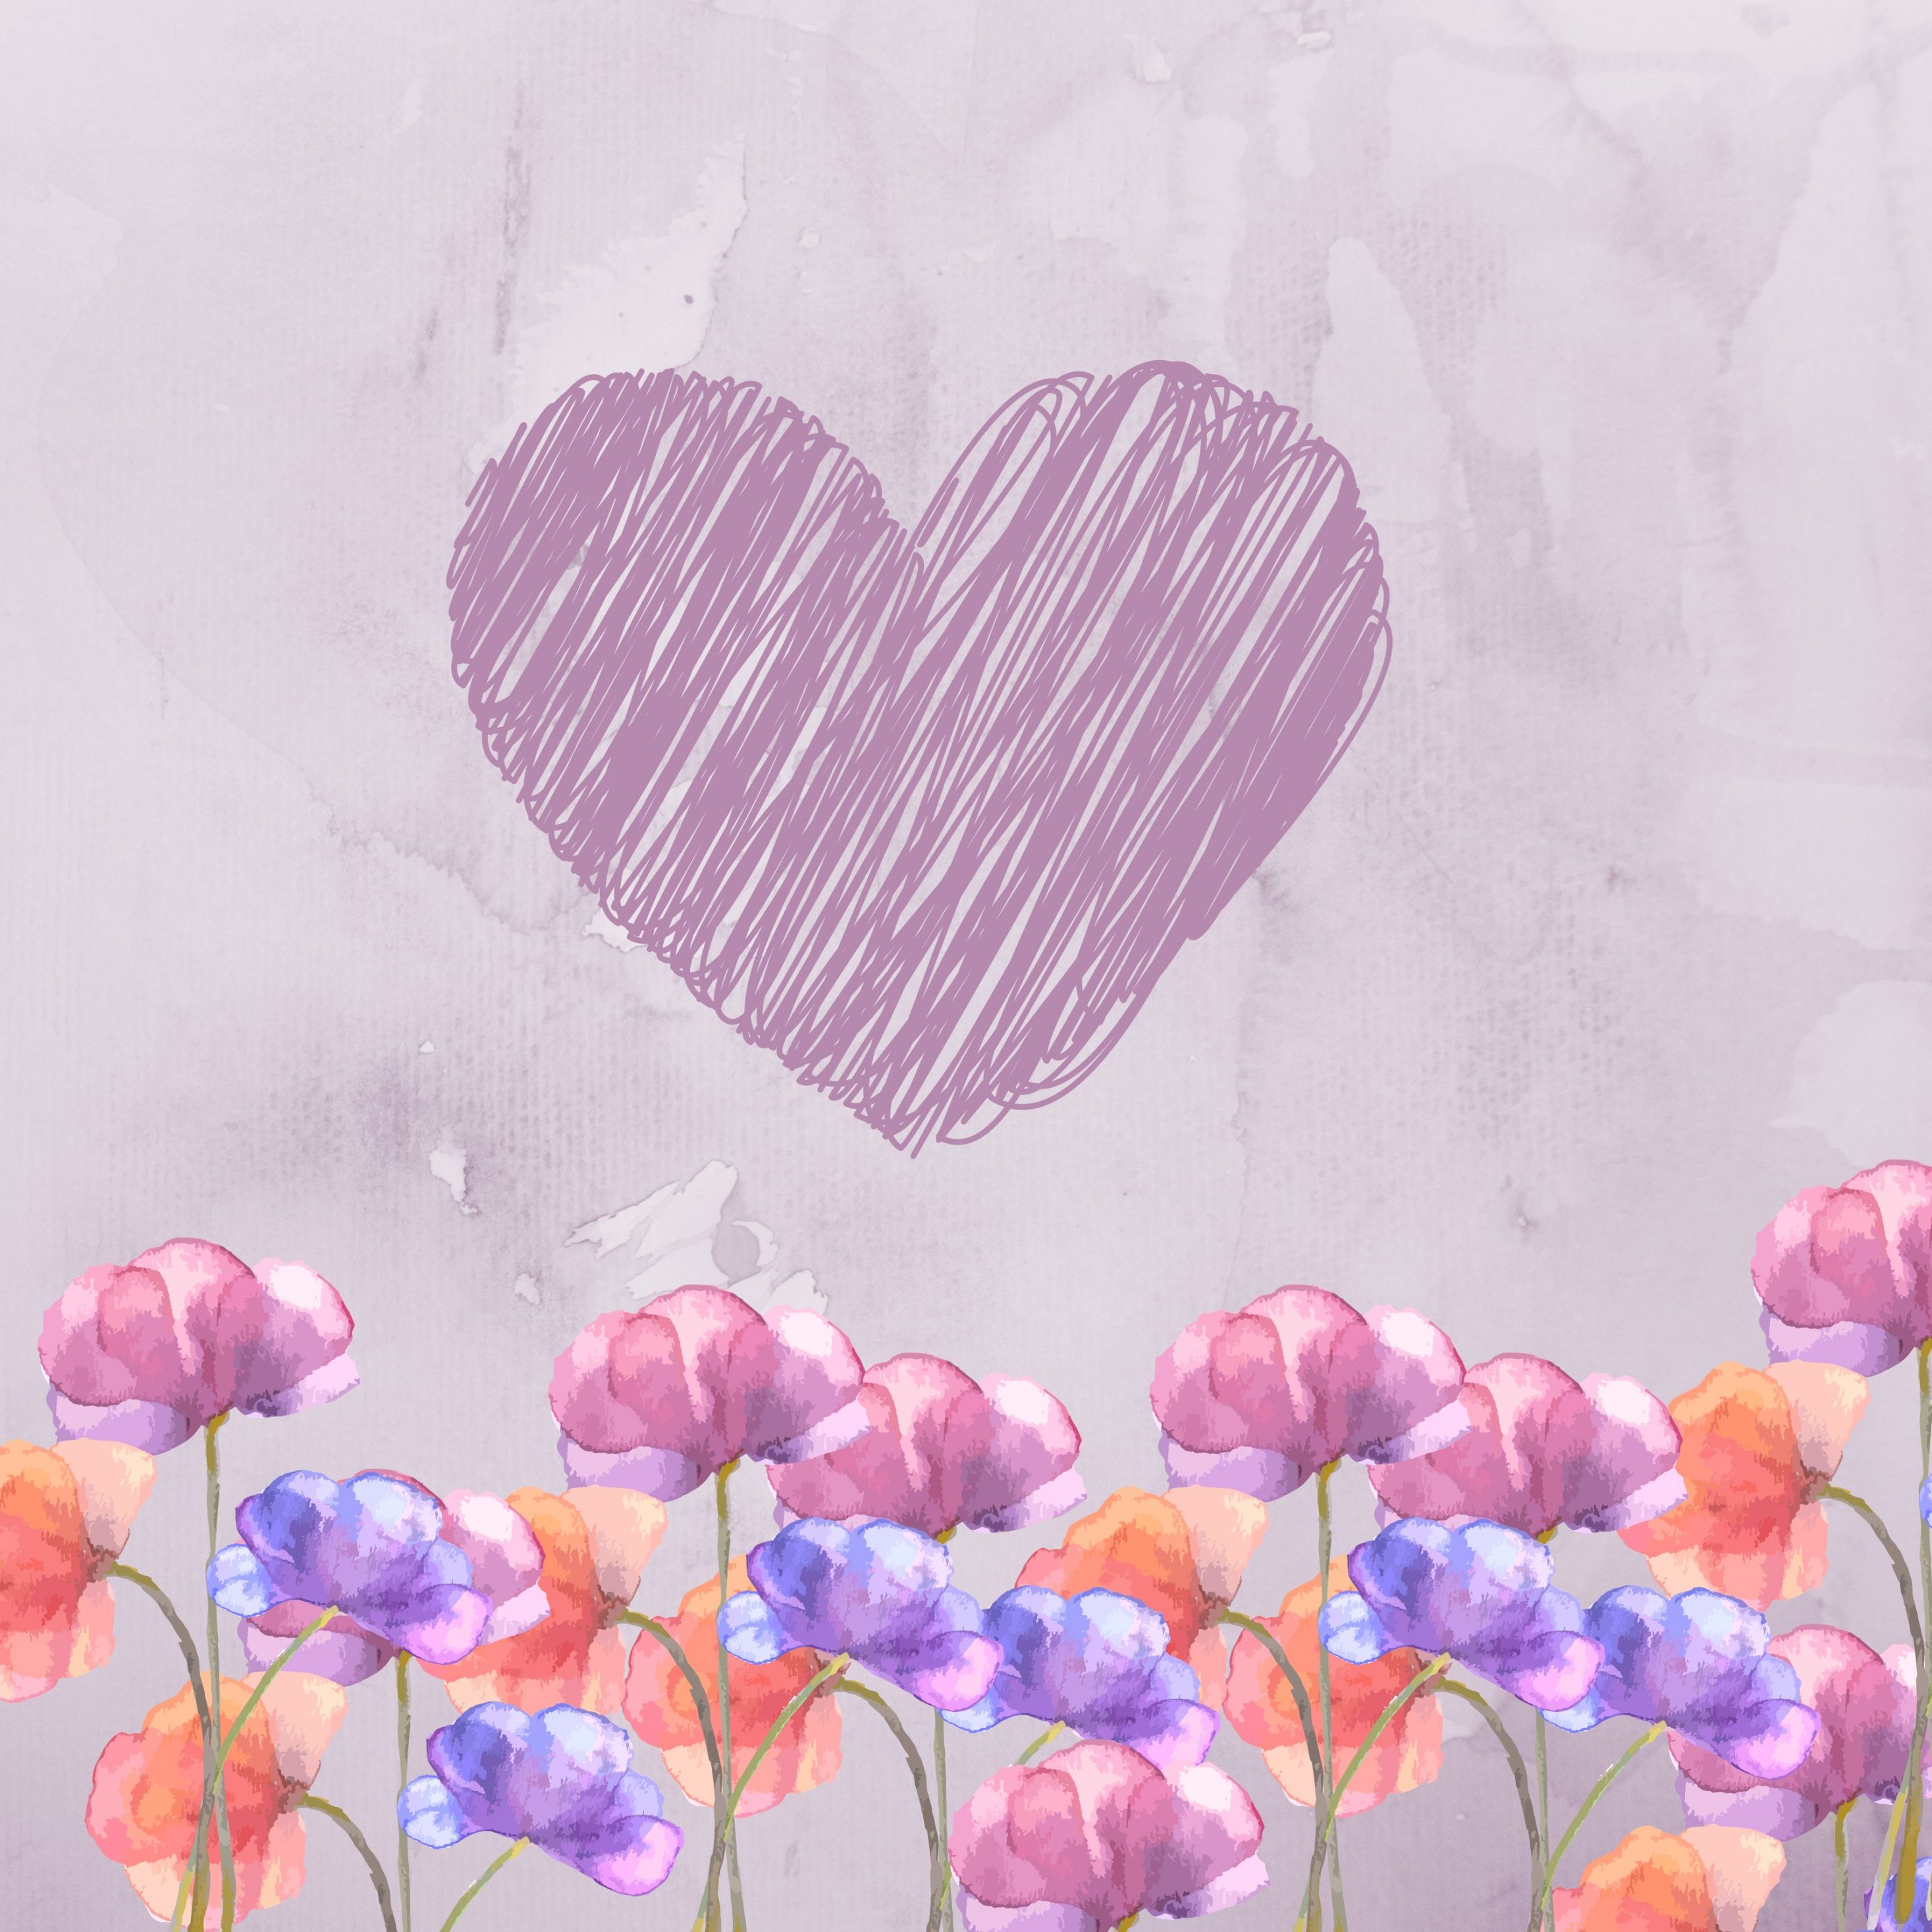 2934x2934 iOS iPad wallpaper 4k Heart Floral Pastels Ipad Wallpaper 2934x2934 pixels resolution